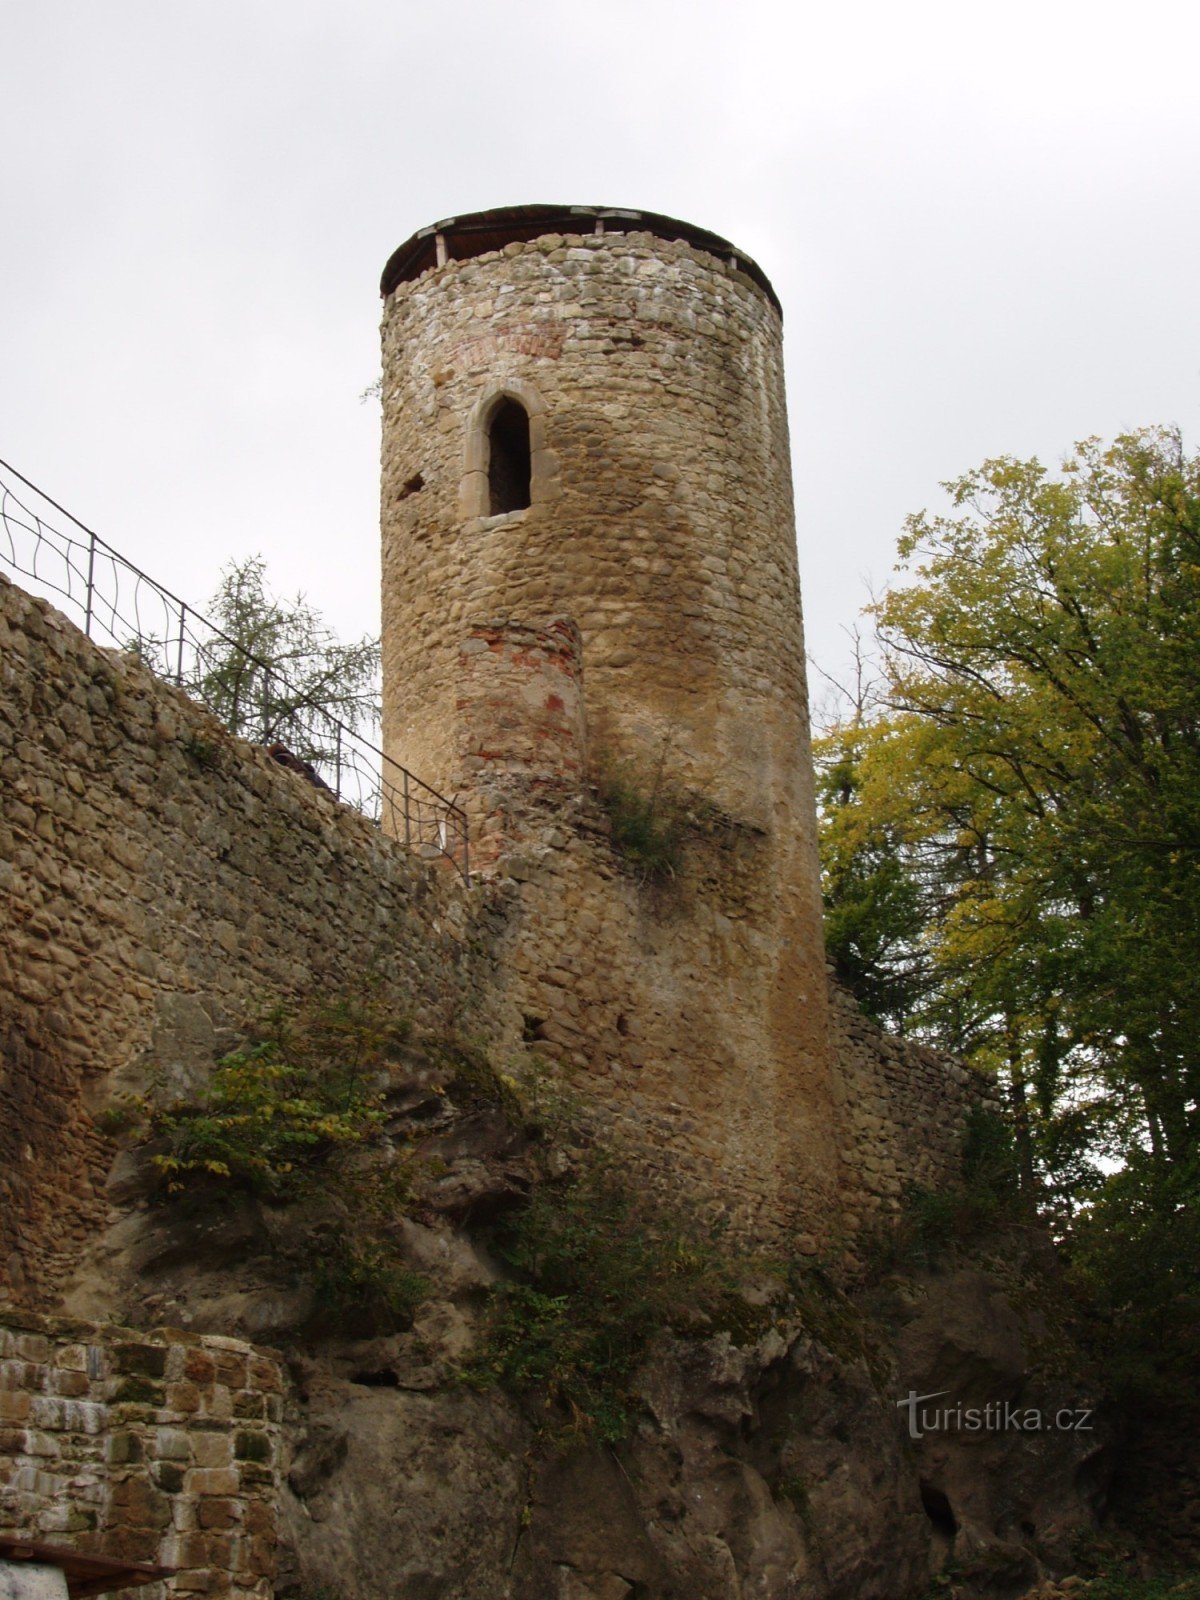 La torre cilíndrica occidental del castillo de Cimburk cerca de Koryčany